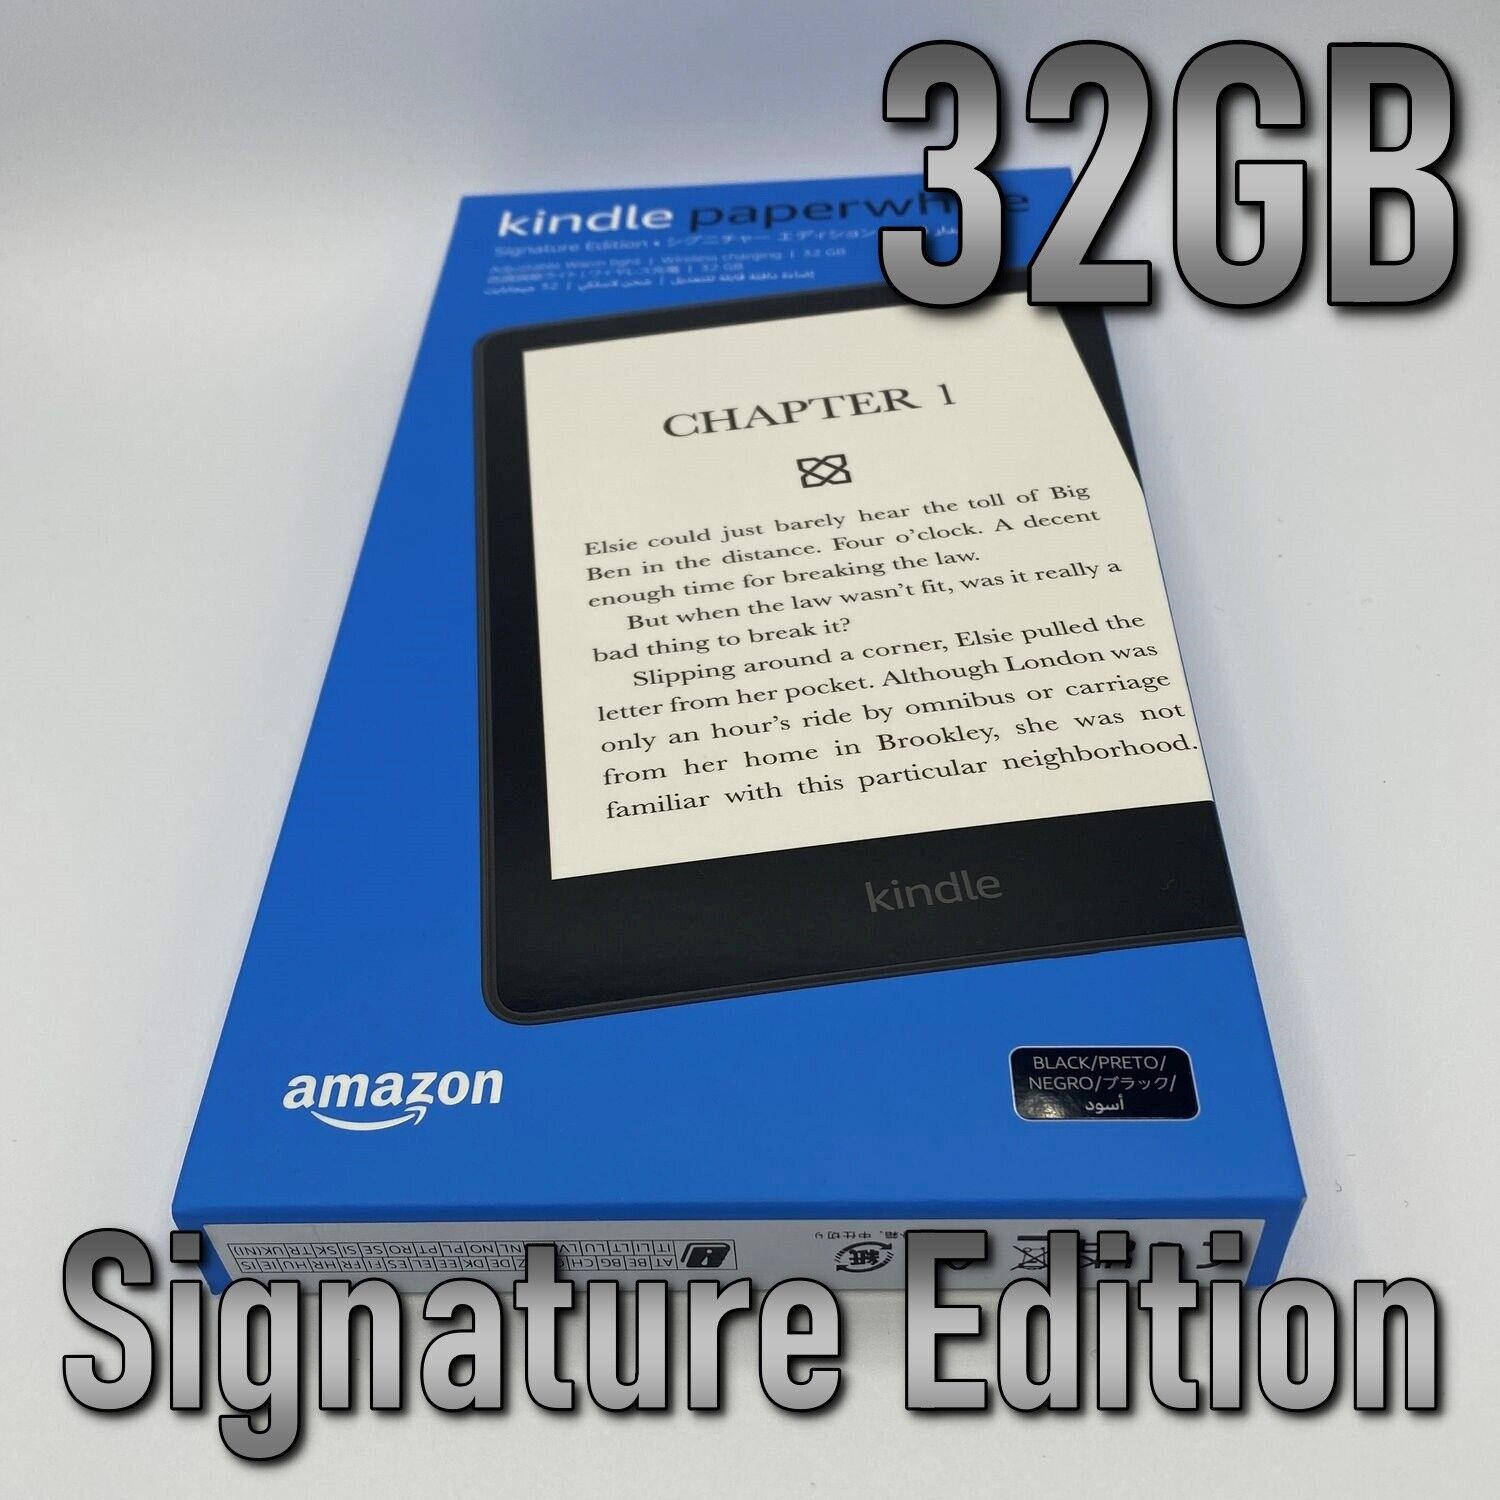 Kindle Paperwhite Signature Edition (32 GB) 6.8